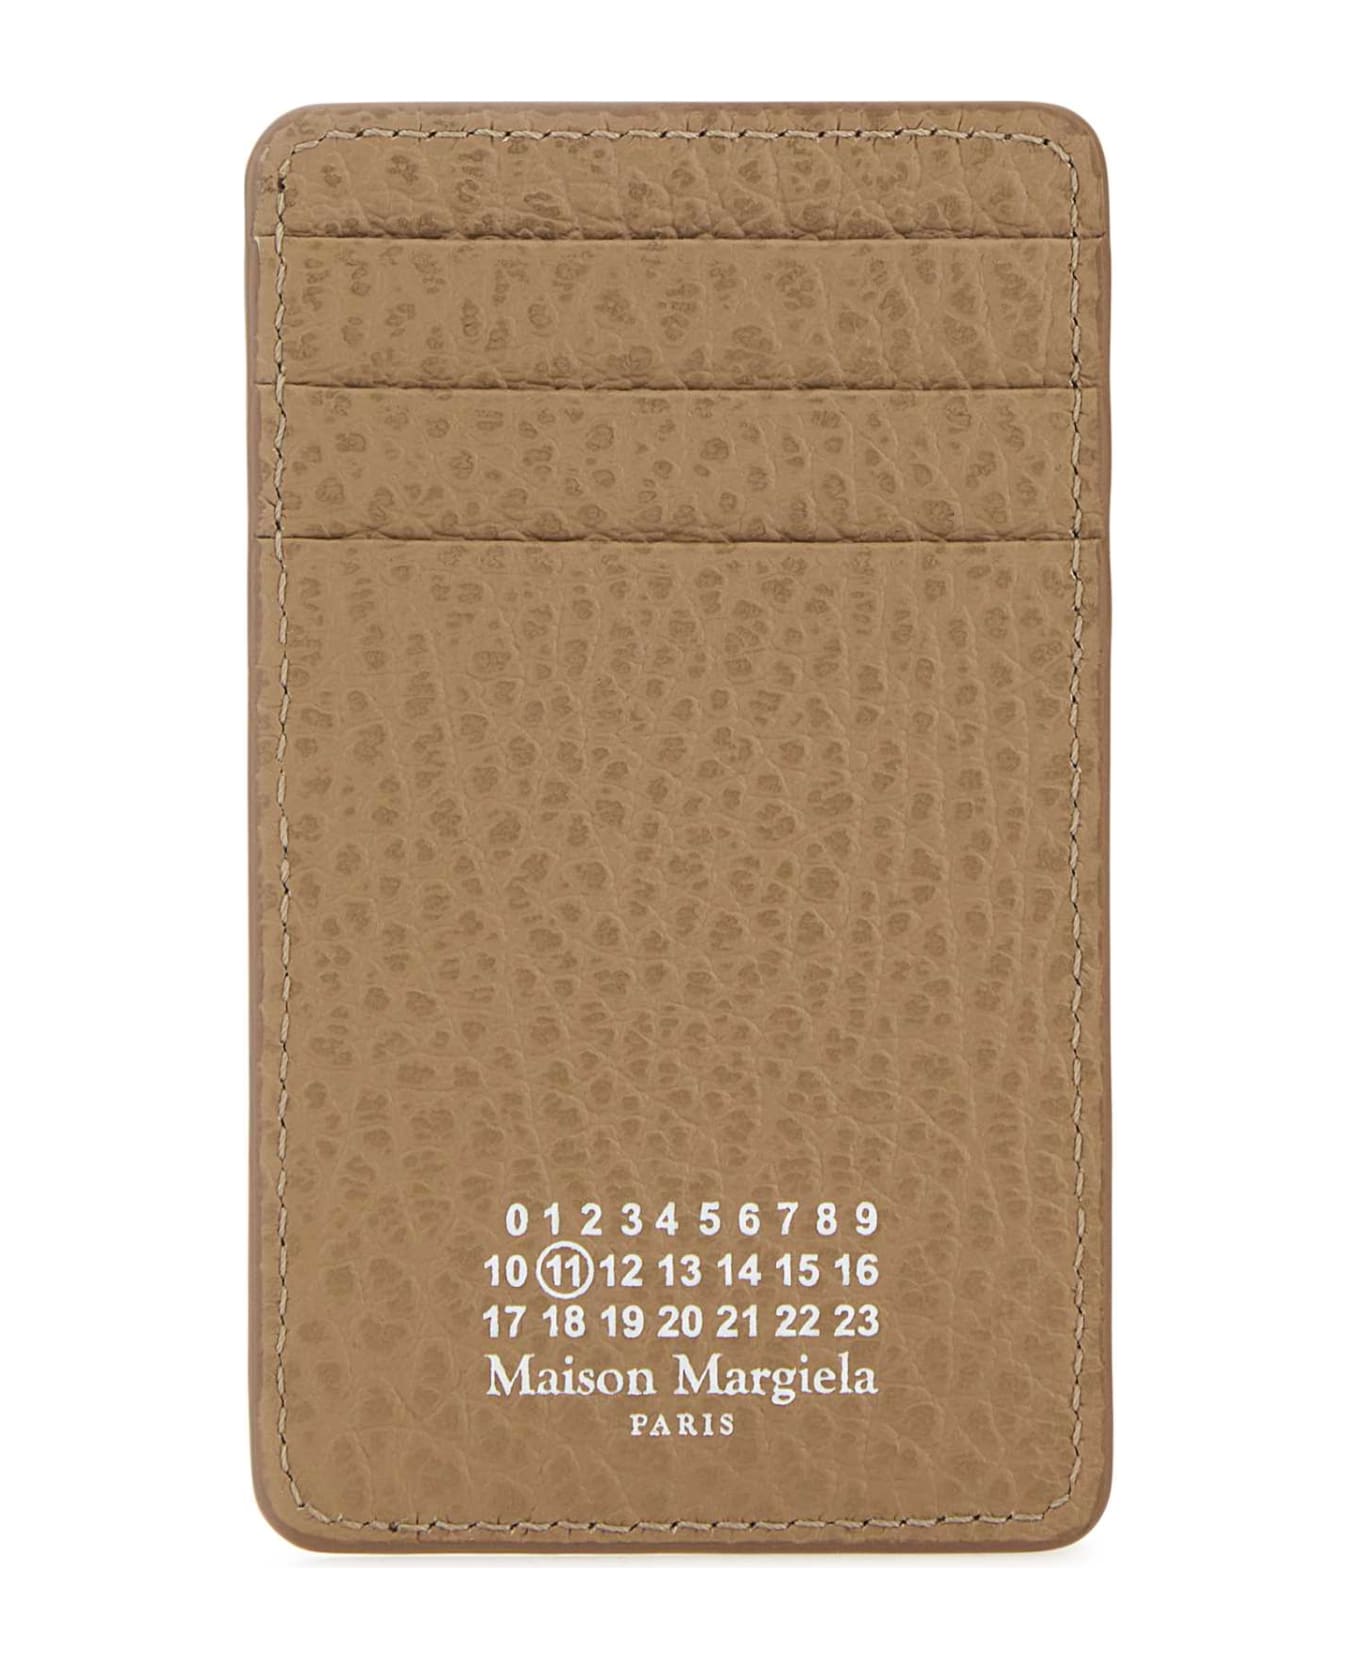 Maison Margiela Beige Leather Card Holder - BICHE 財布